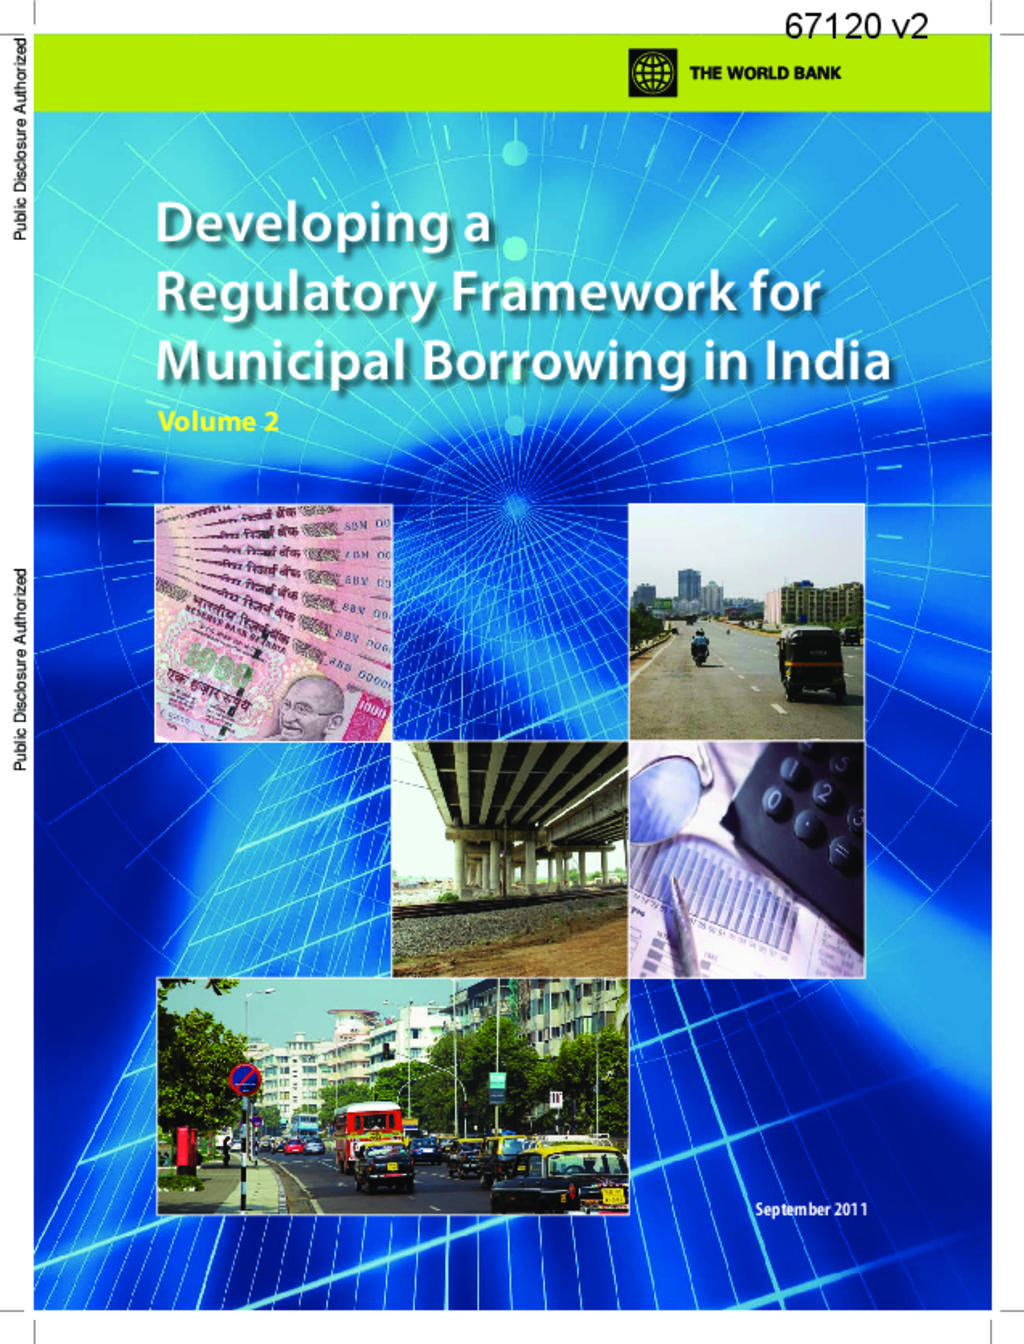 Developing a Regulatory Framework for Municipal Borrowing in India